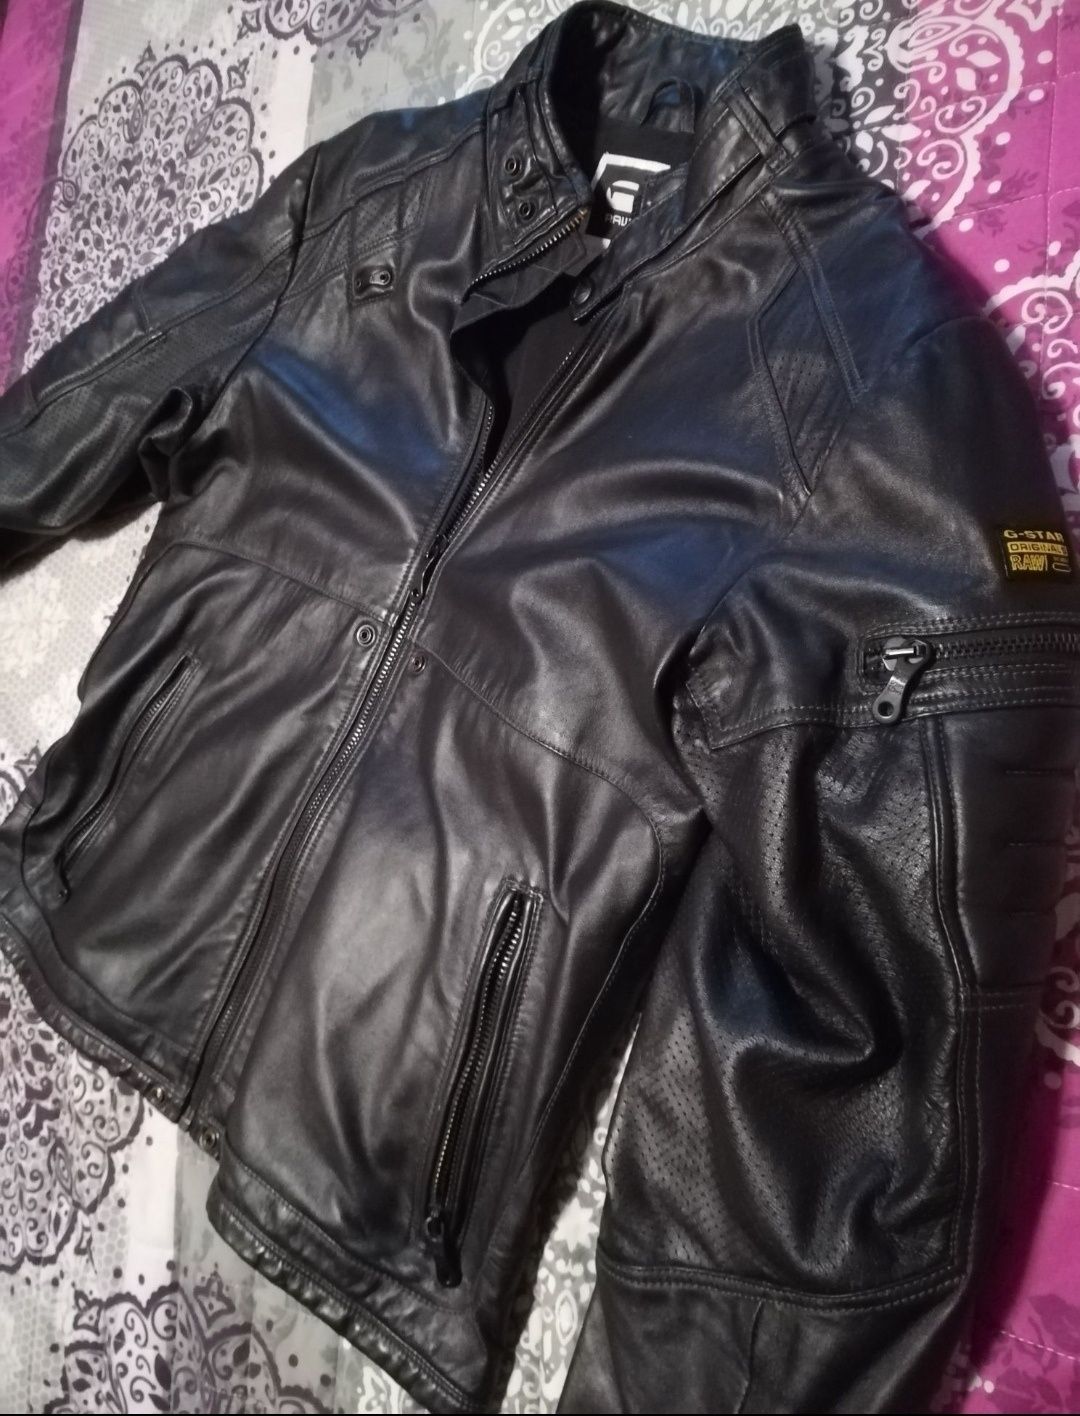 G-star Mens MFD leather jacket